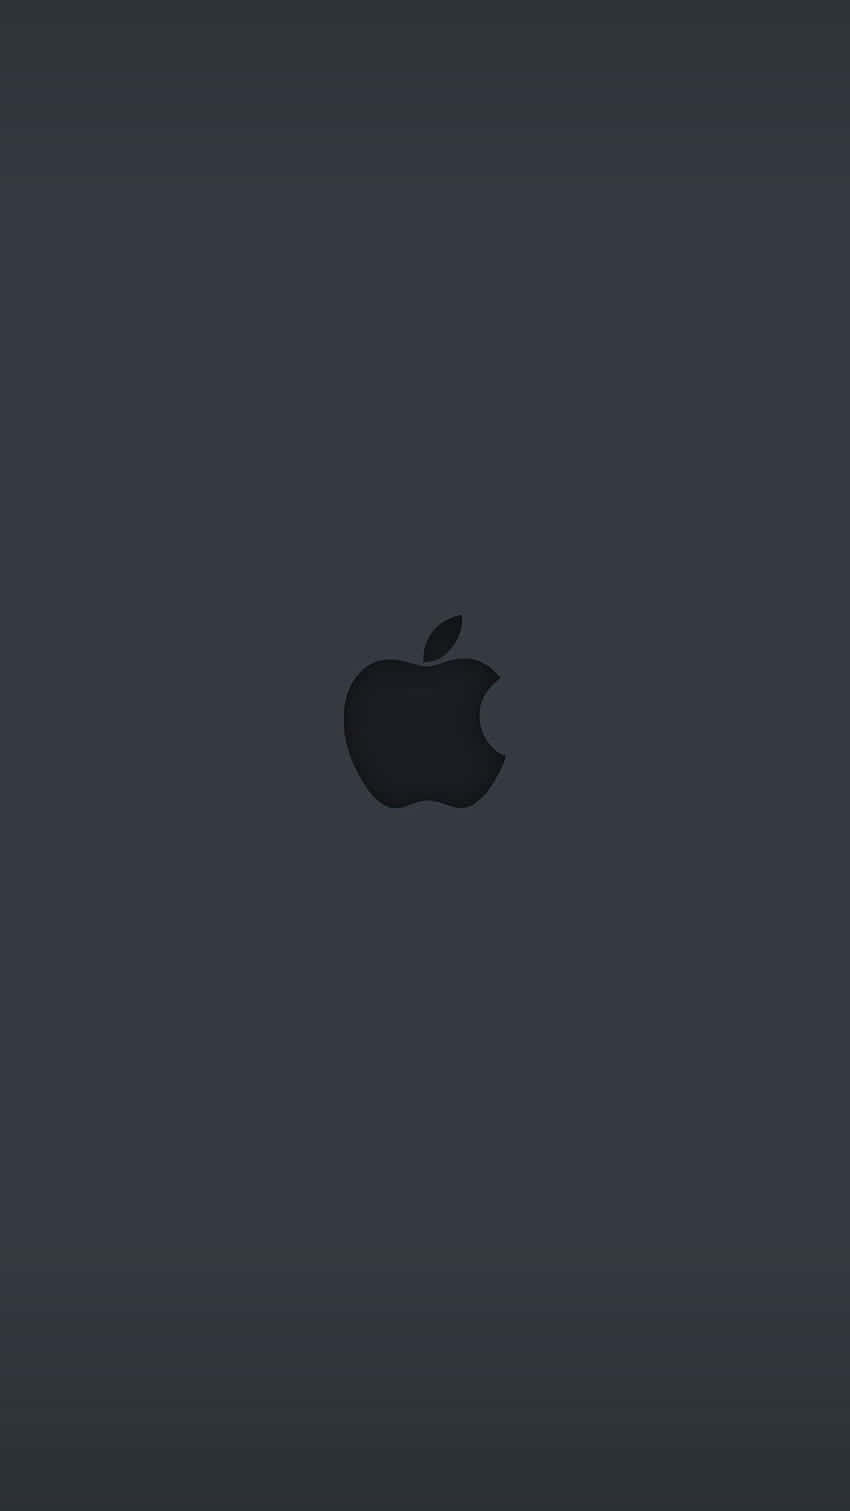 Sort Apple-logo 850 X 1511 Wallpaper